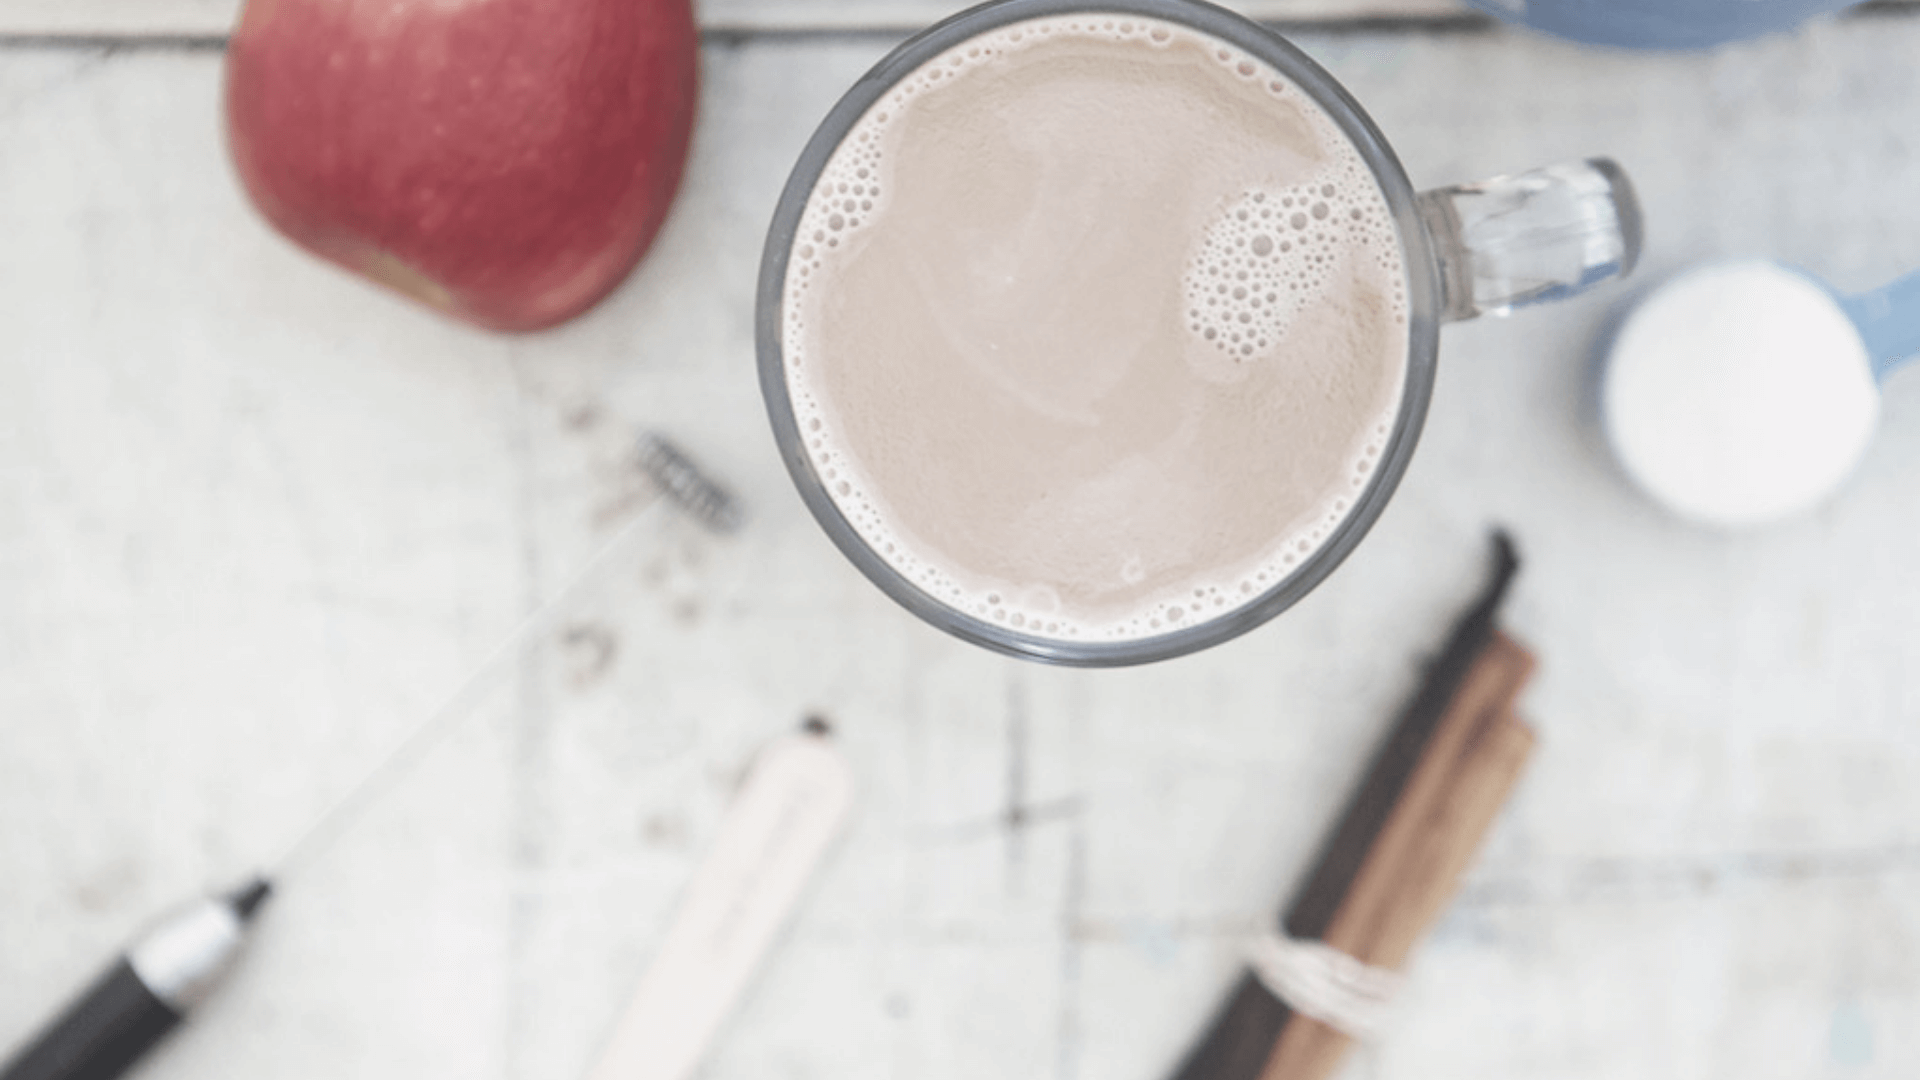 Sugar Free Apple Cider Recipe (with a bonus latte addition)